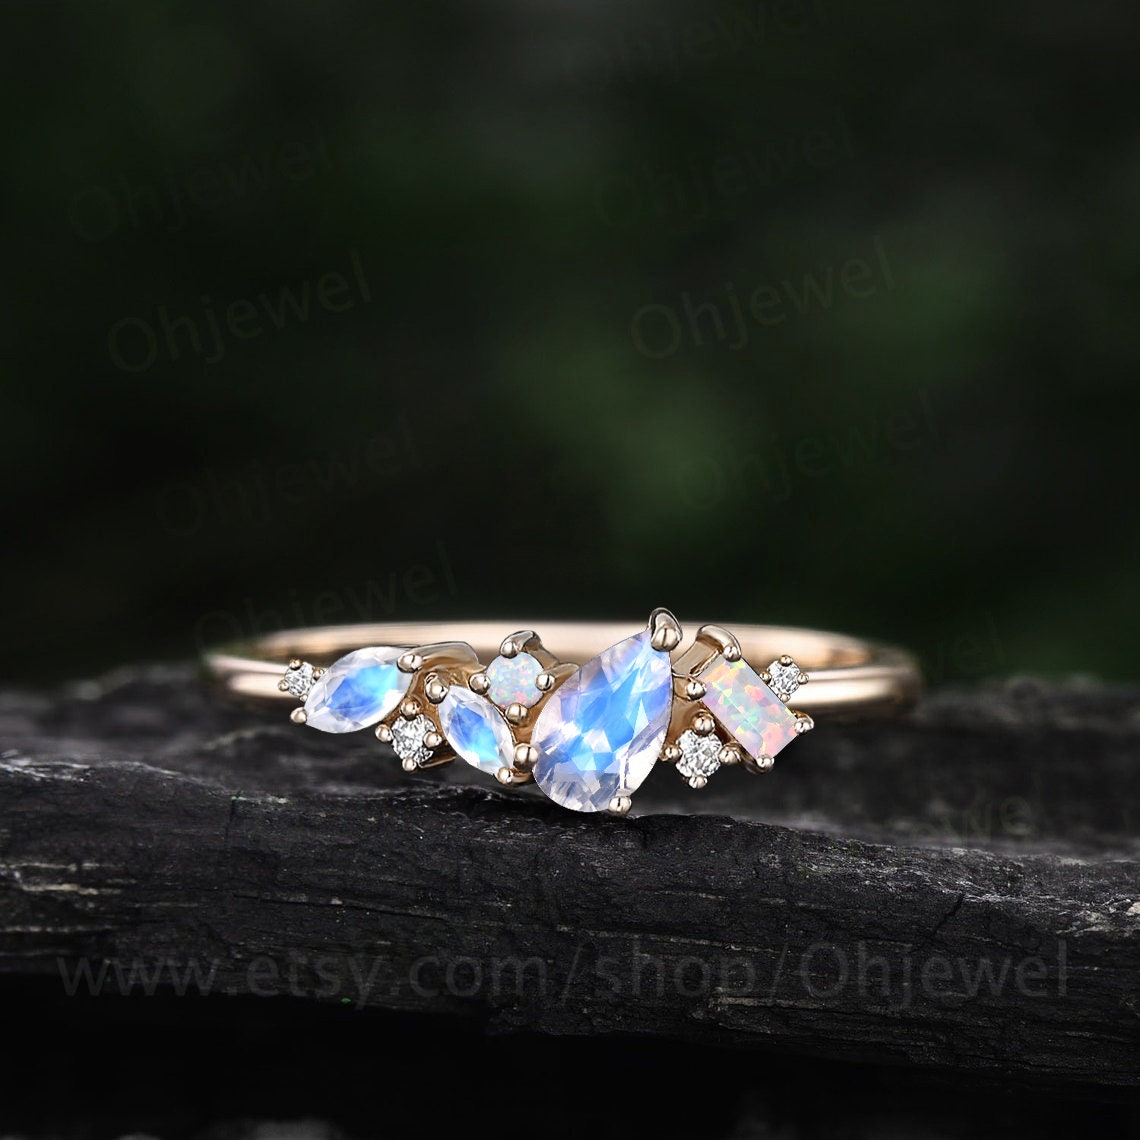 Pear moonstone ring vintage art deco Baguette opal ring rose gold cluster wedding band women moissanite ring dainty June brthstone ring gift